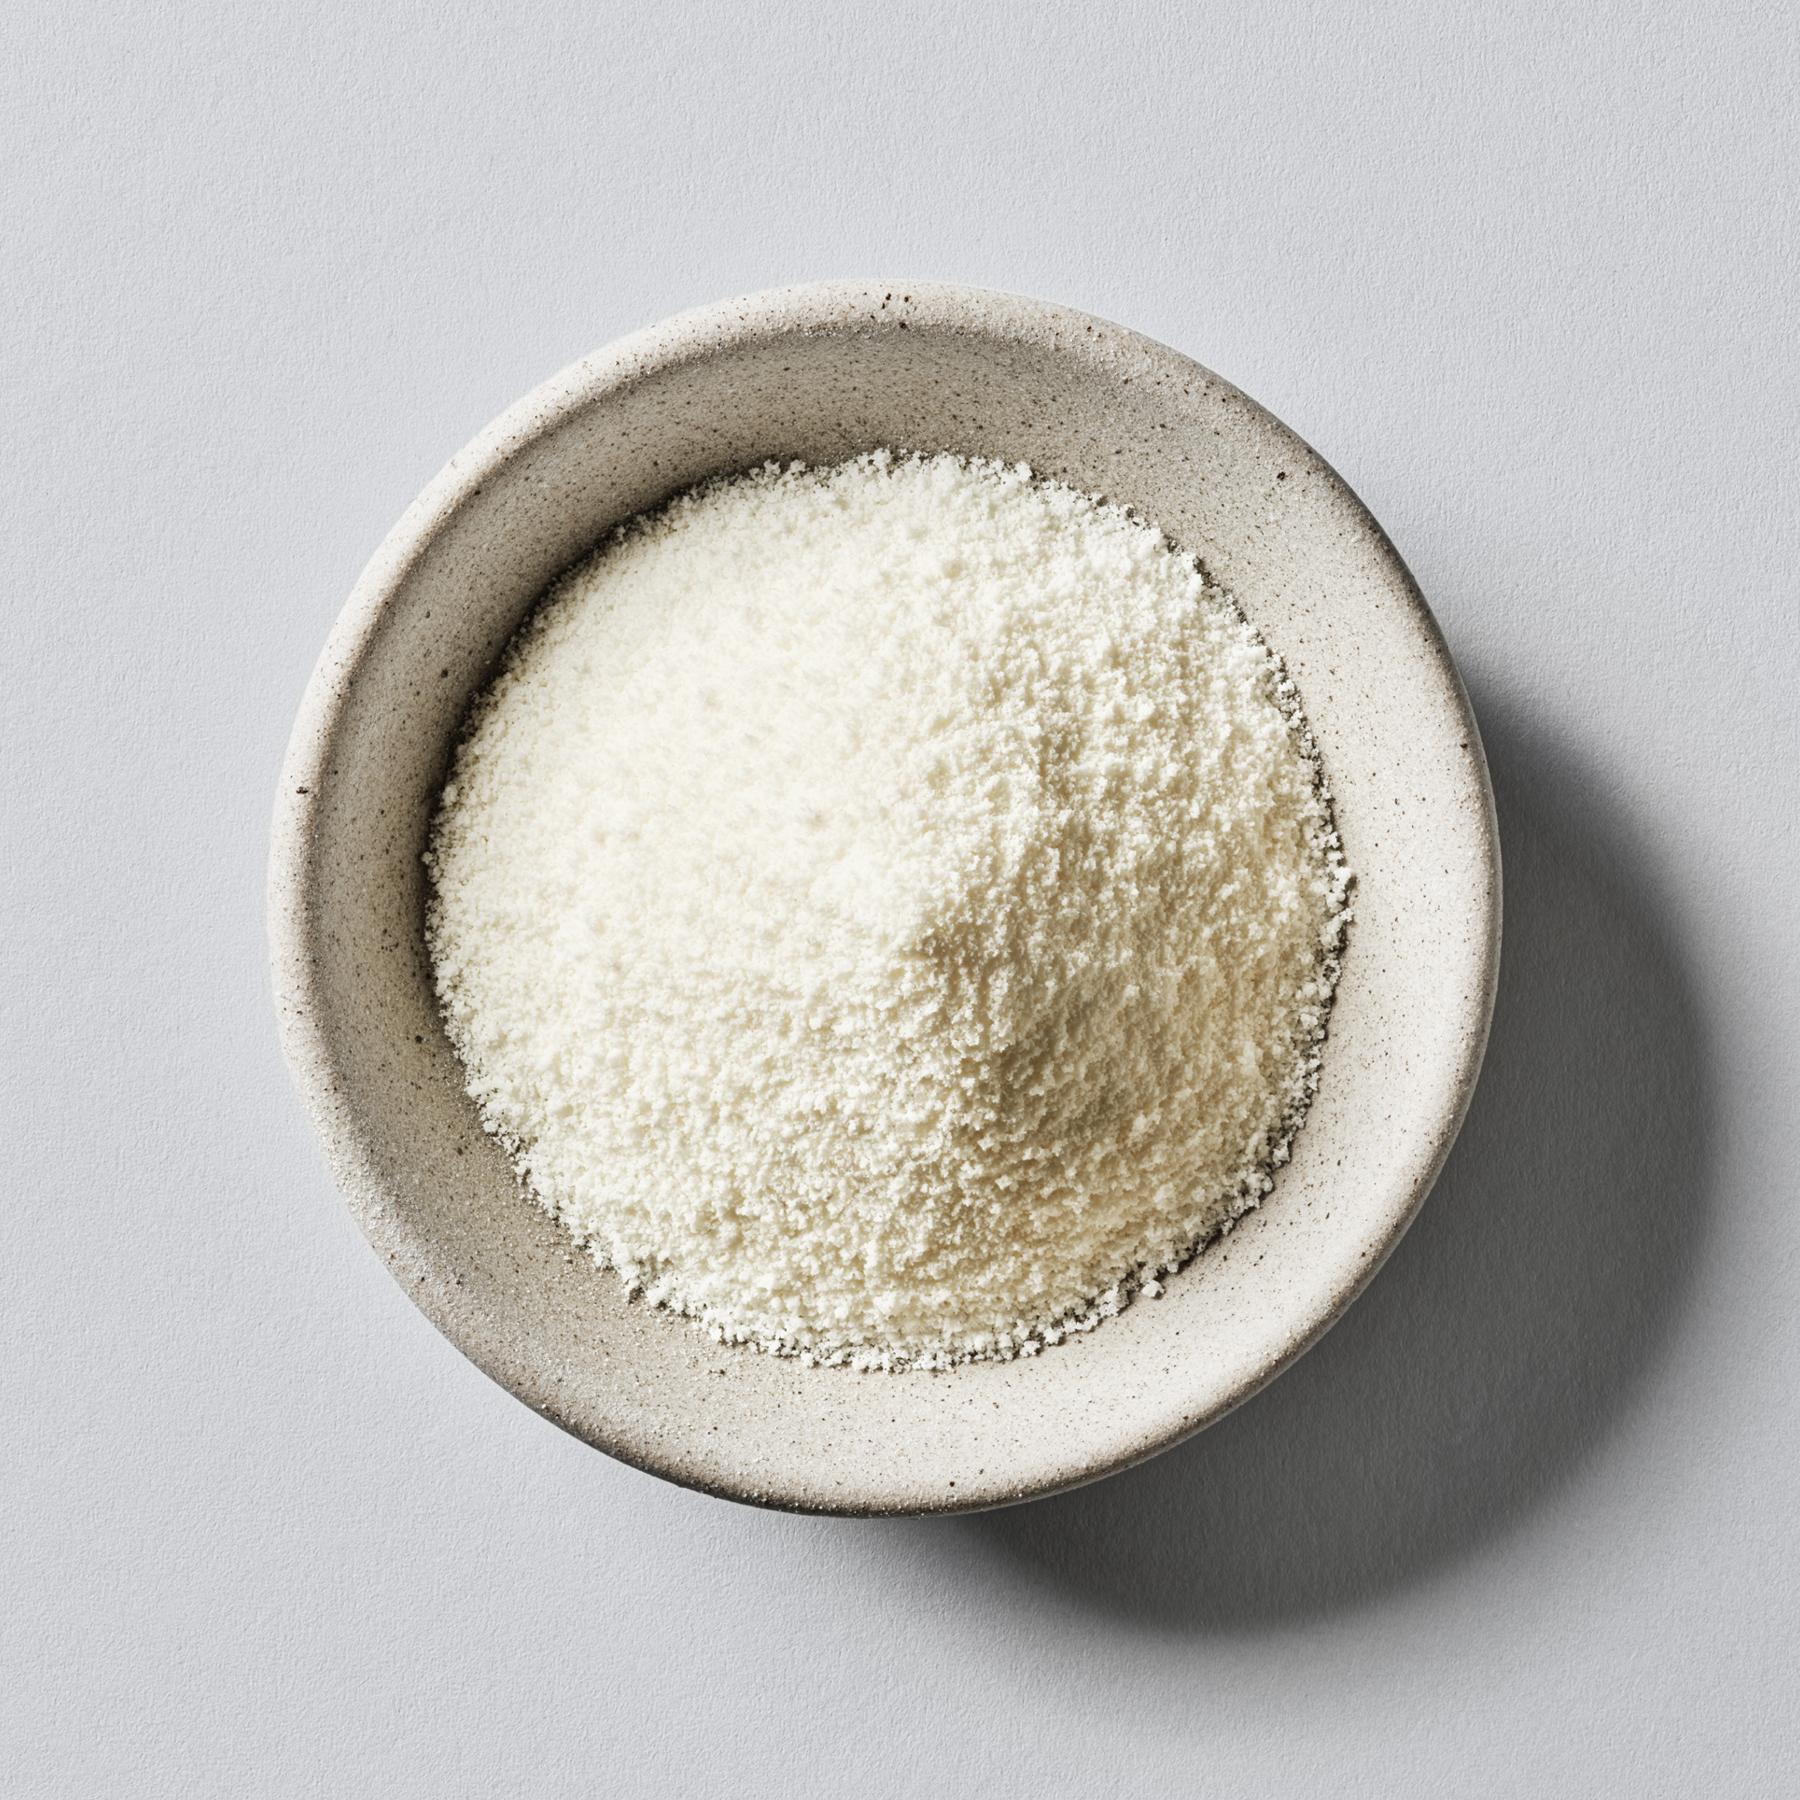 Sports Research Multi Collagen Complex Powder in a ceramic bowl.